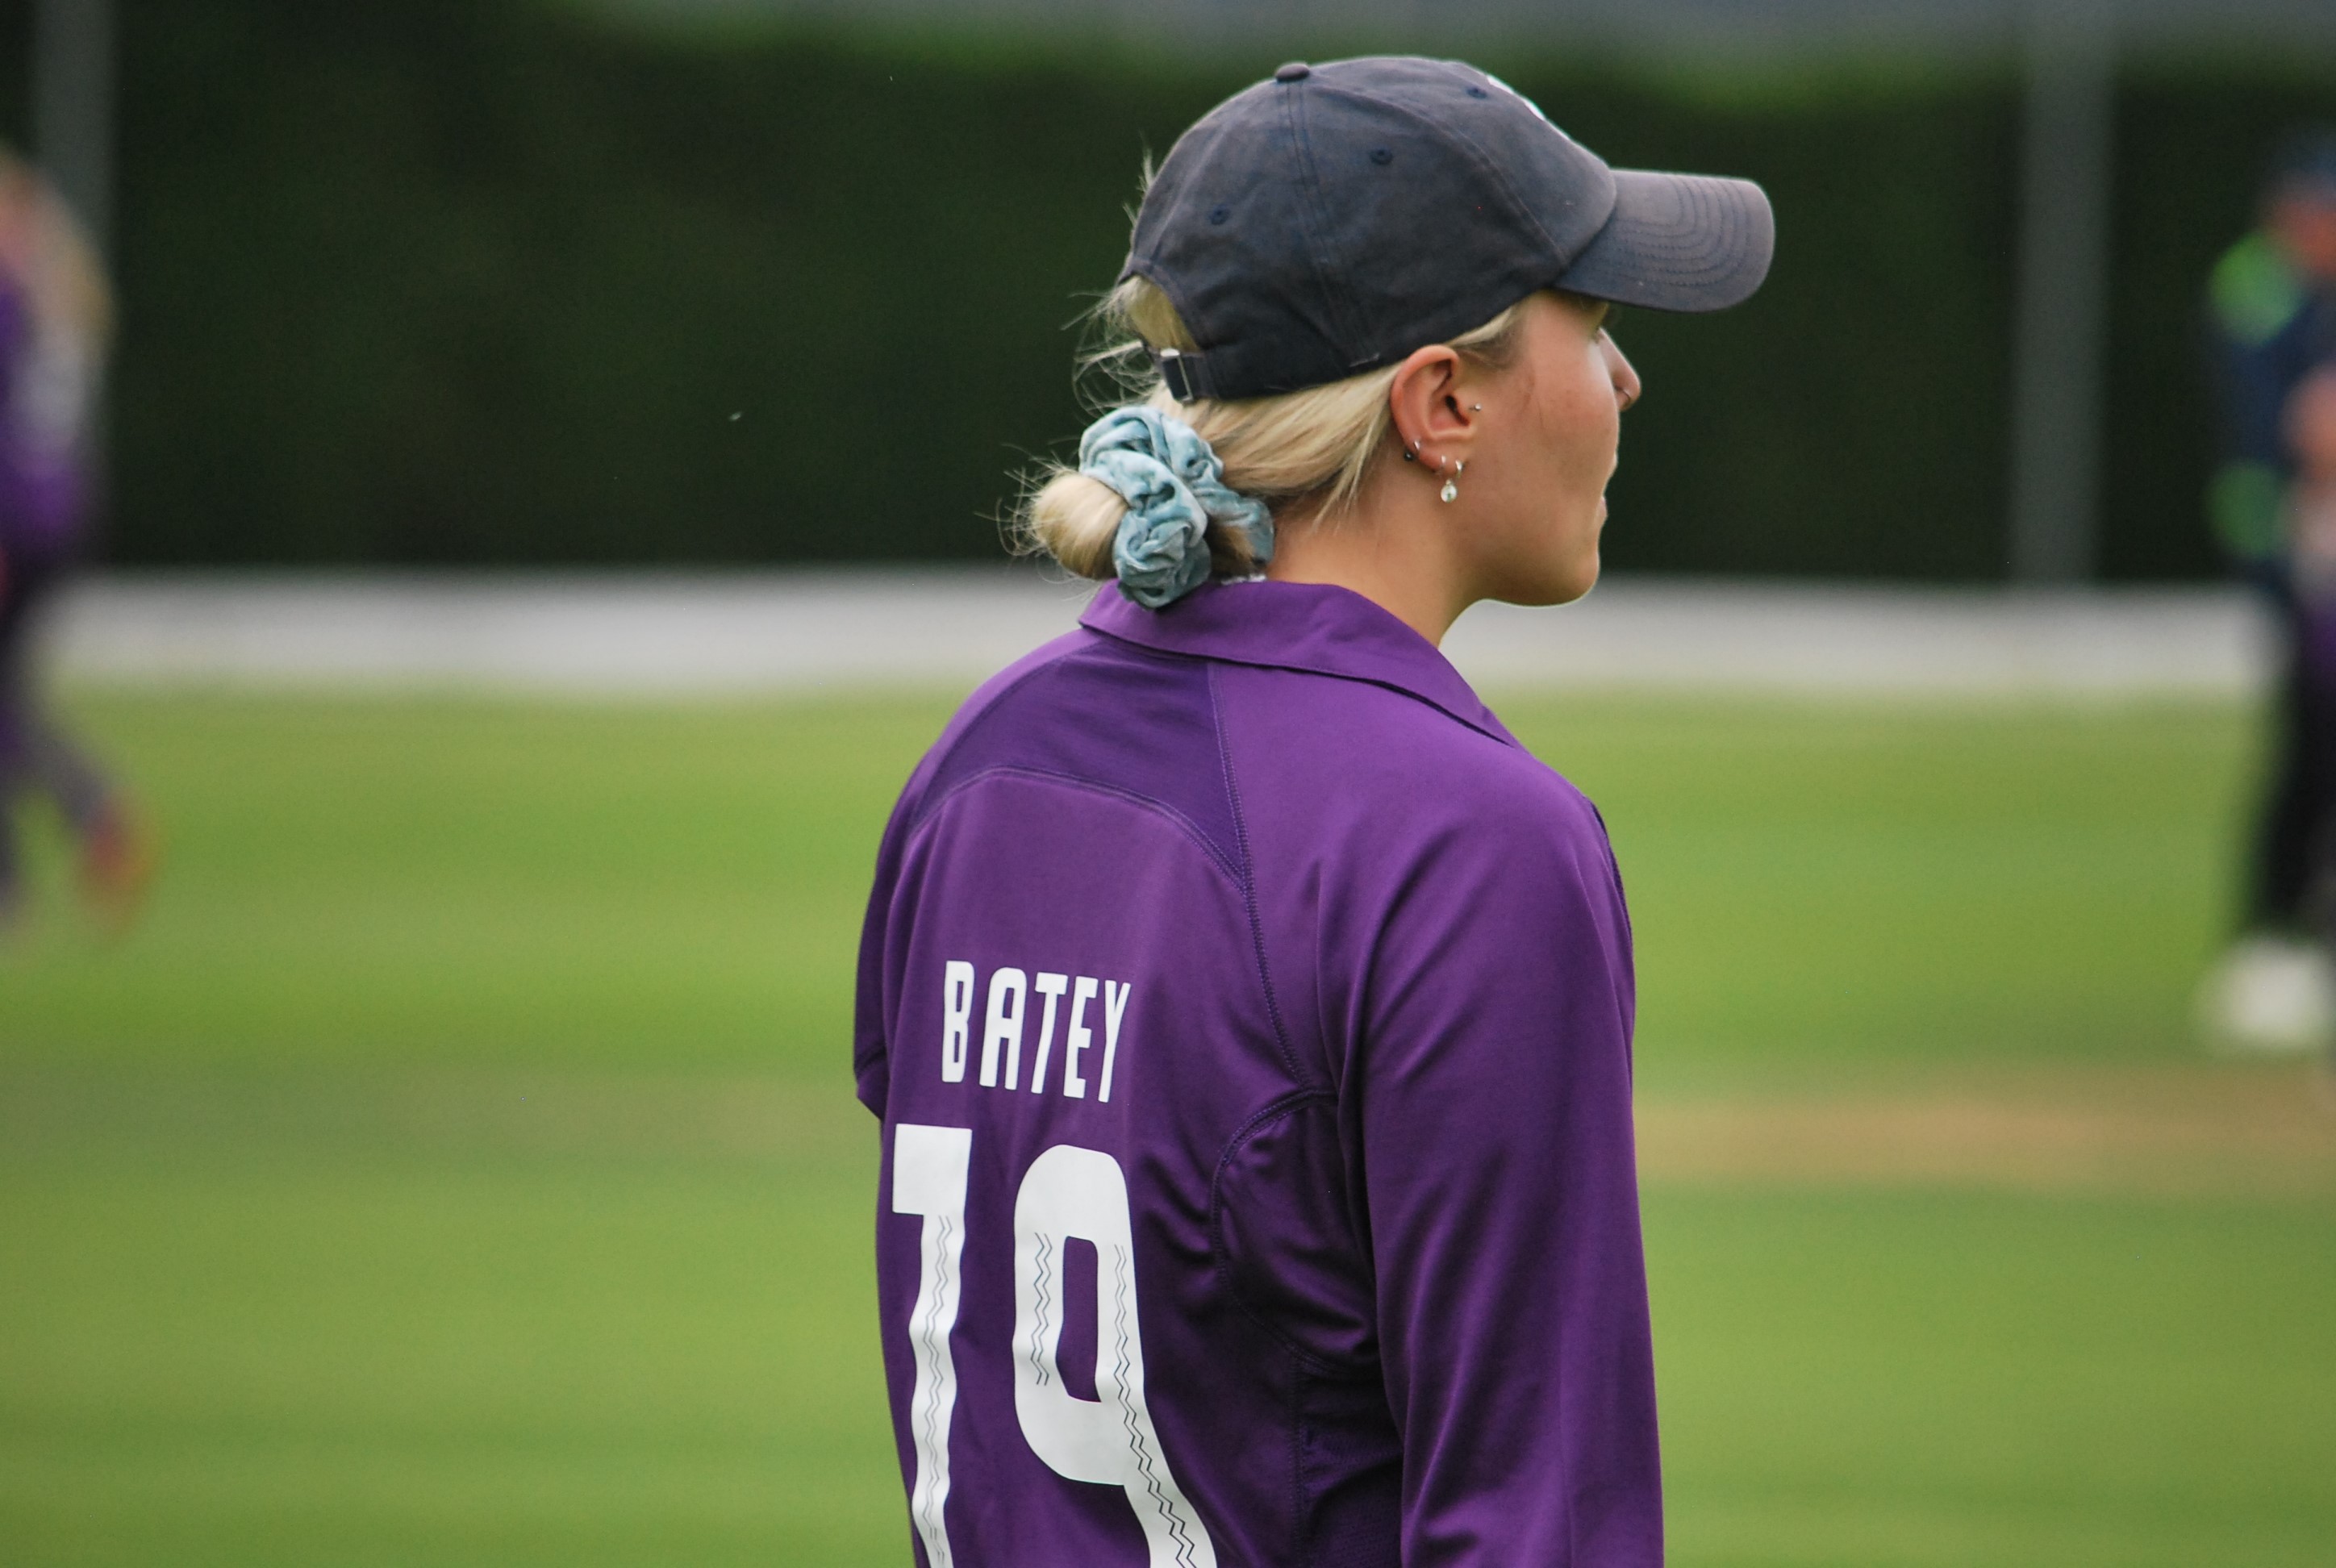 Women's cricket player